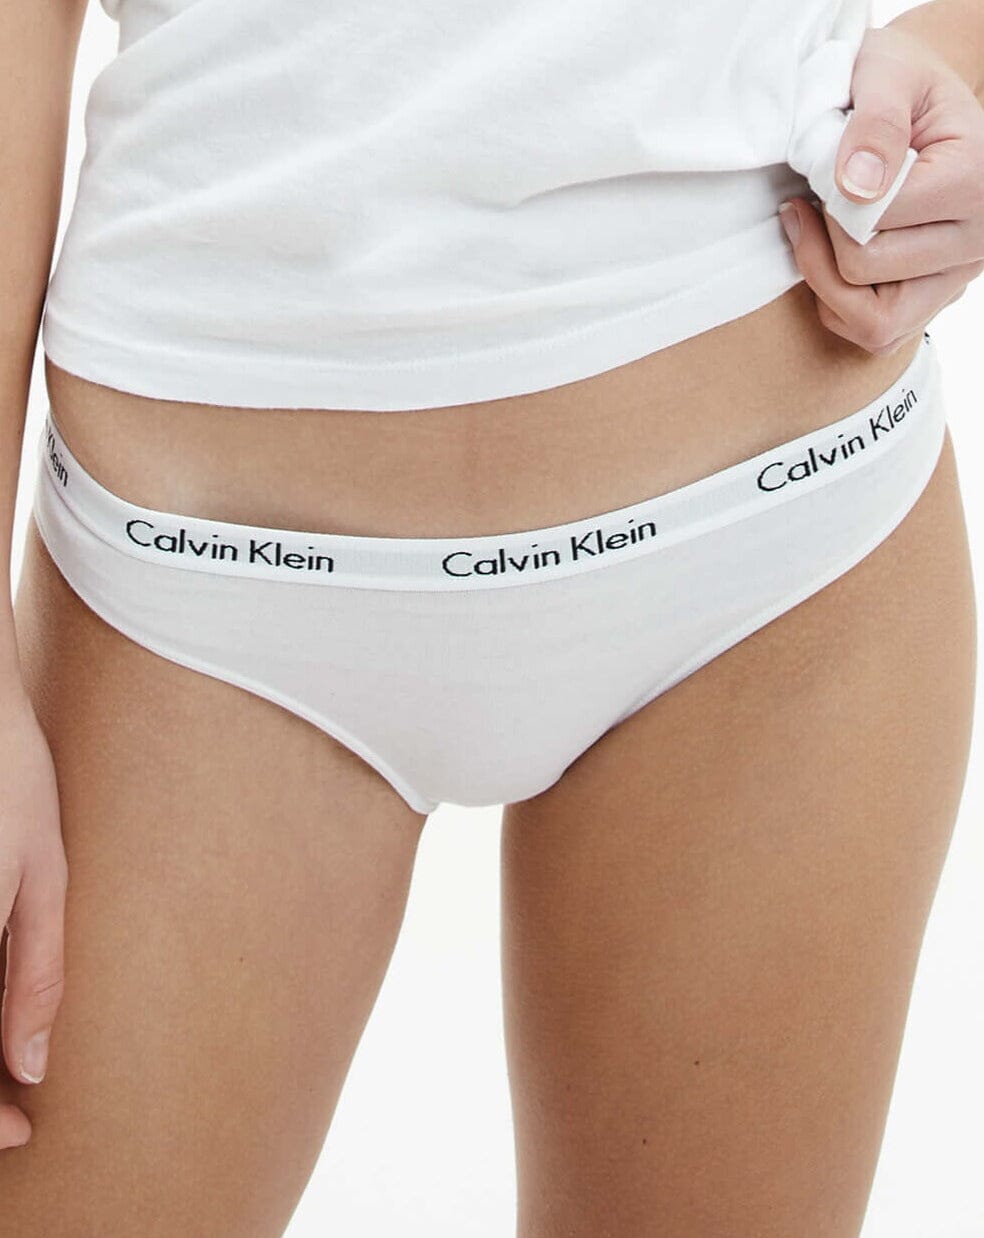 Calvin Klein Carousel 3 Pack Bikini Brief - Black/Grey Heather/White - Curvy